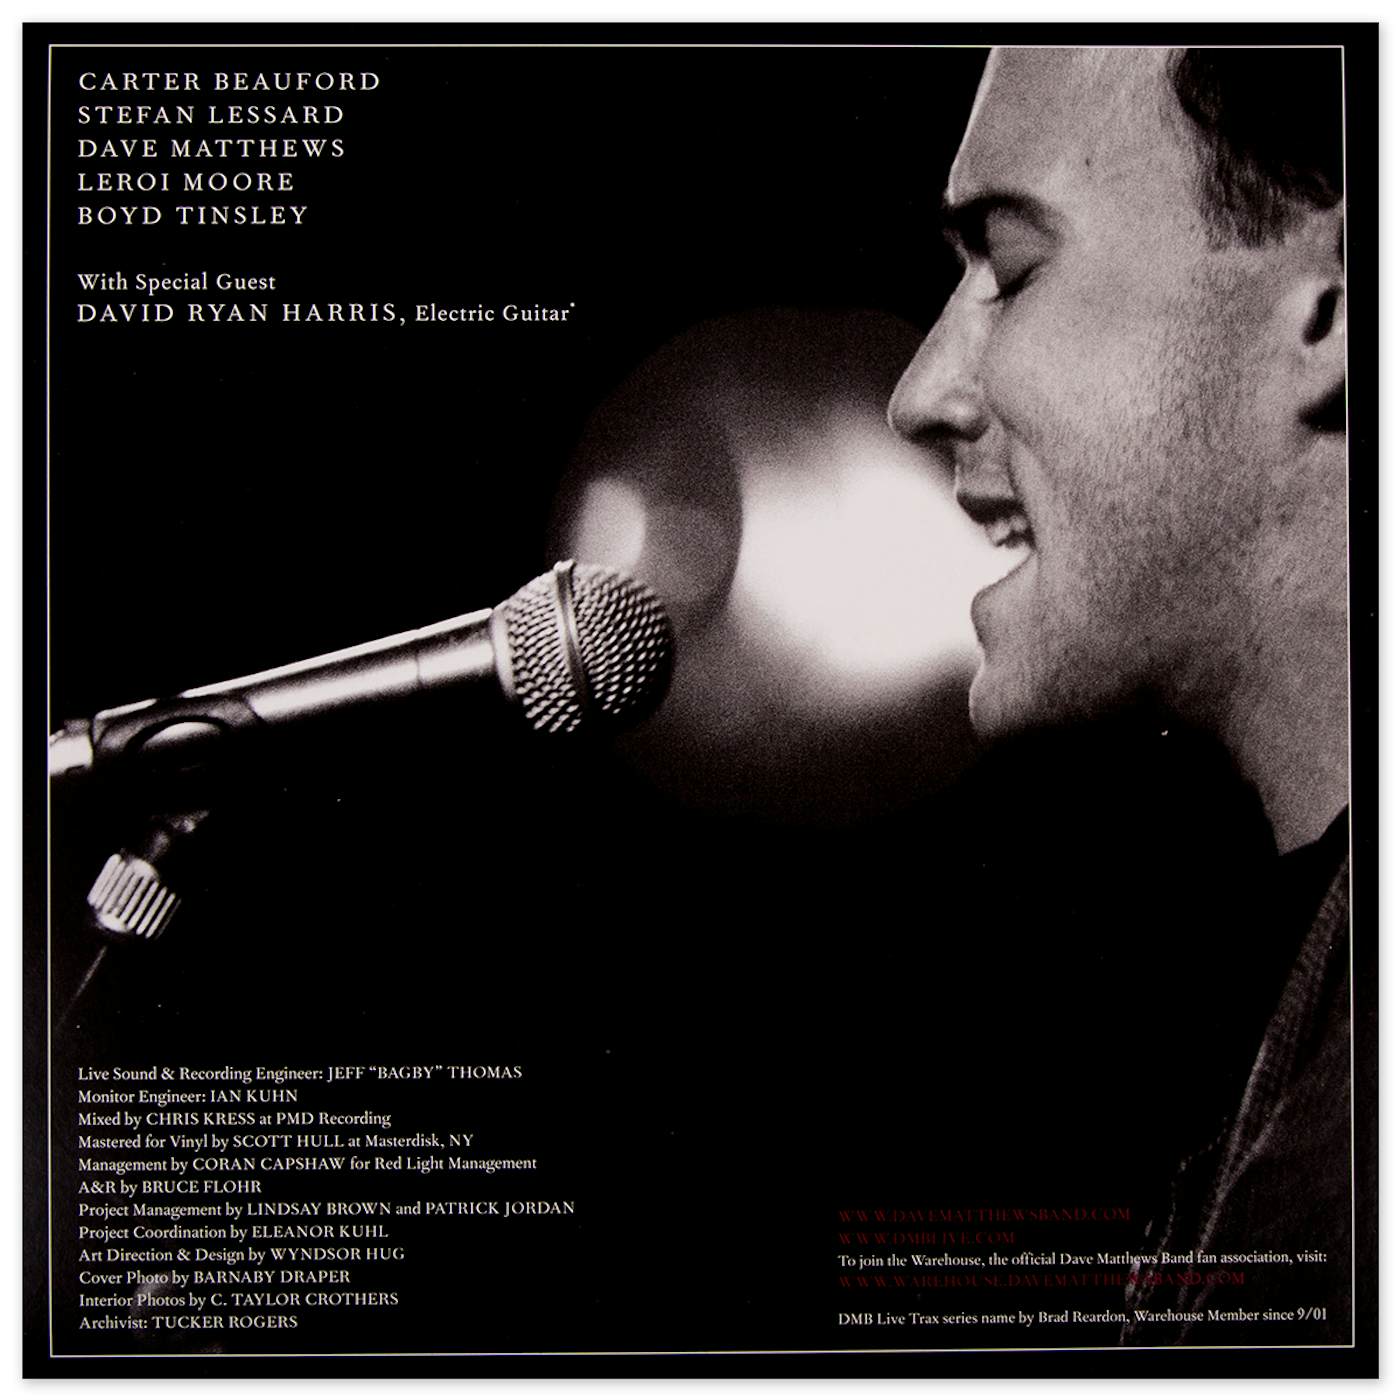 Dave Matthews Band Live Trax Vol. 5: 8/23/95 Meadow Brook Music Festival 4 LP Set (Vinyl)